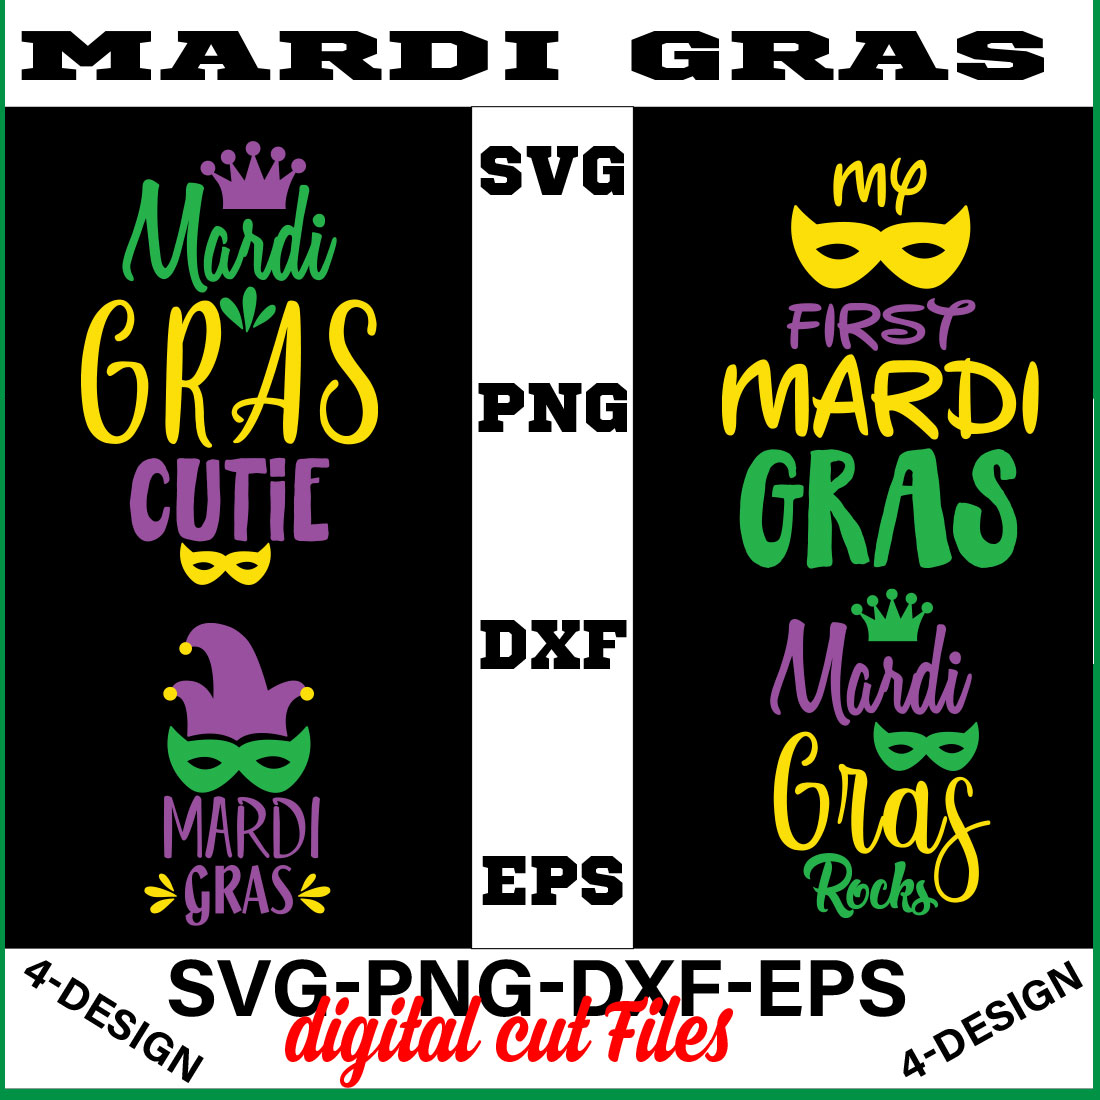 Mardi Gras SVG T-shirt Design Bundle Volume-02 cover image.